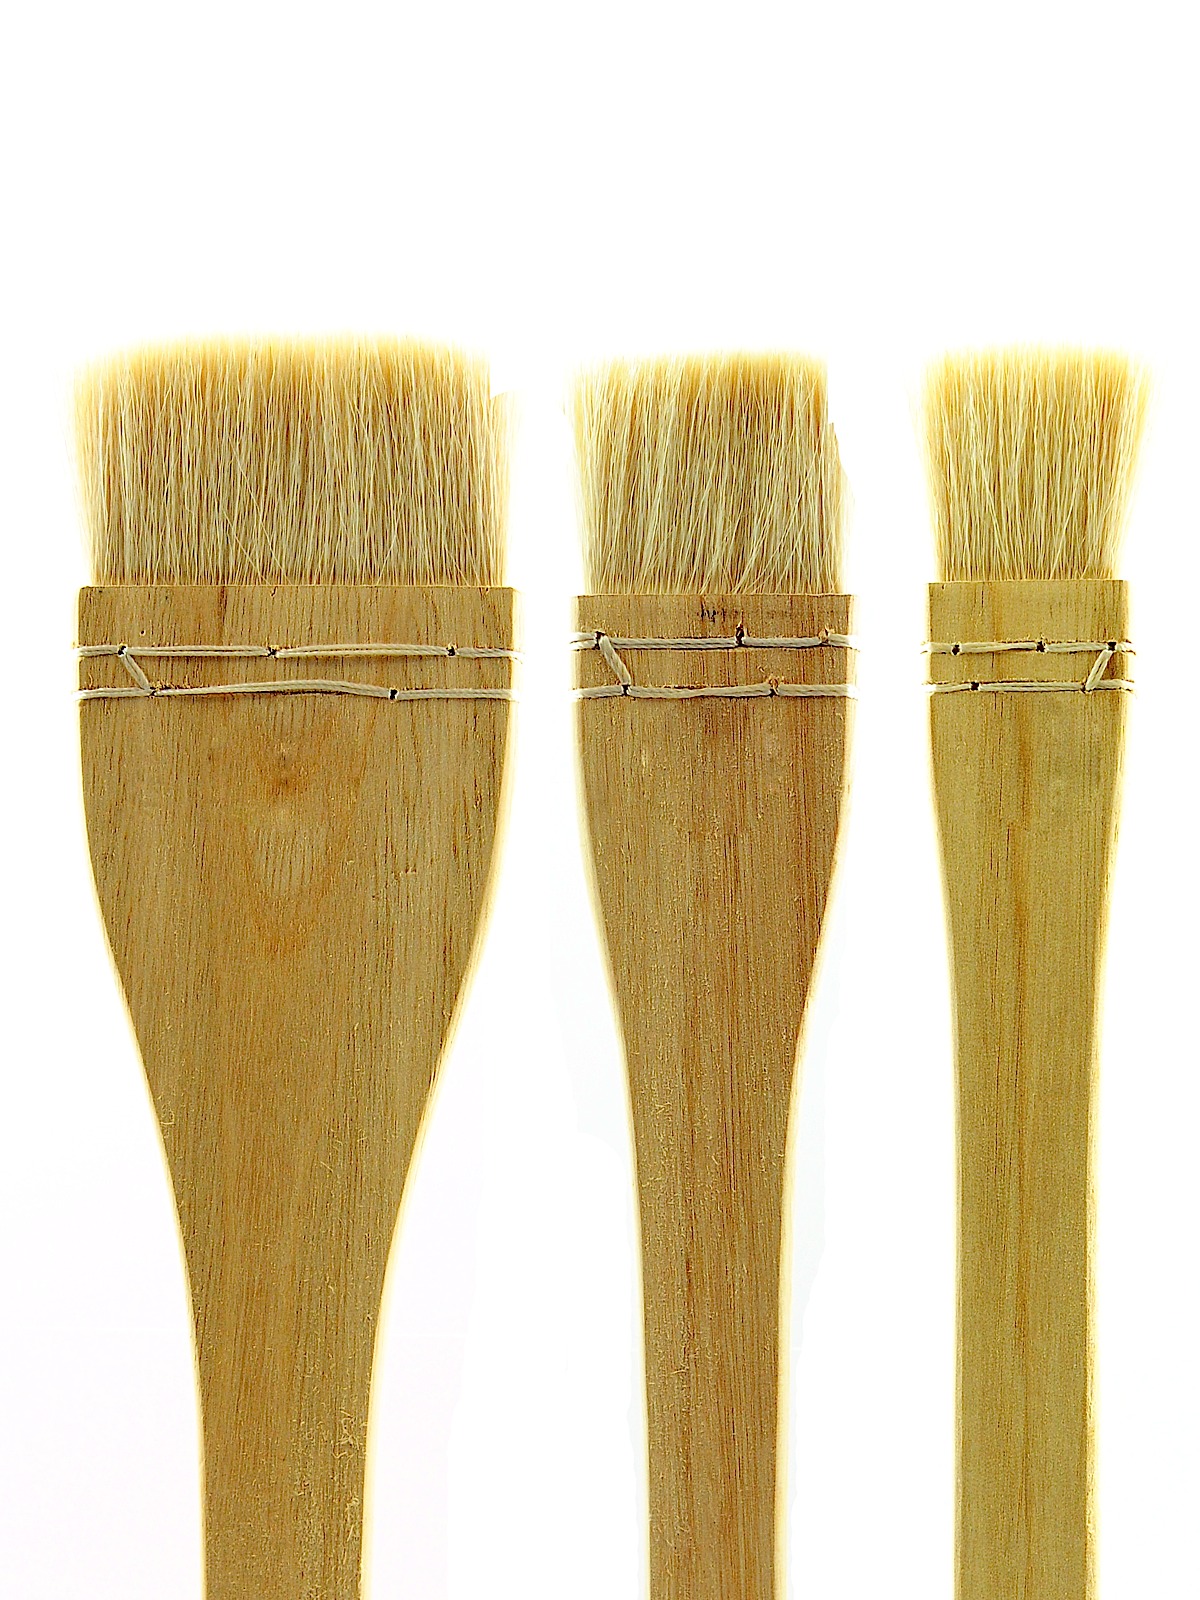 Yasutomo - Student Hake Brushes